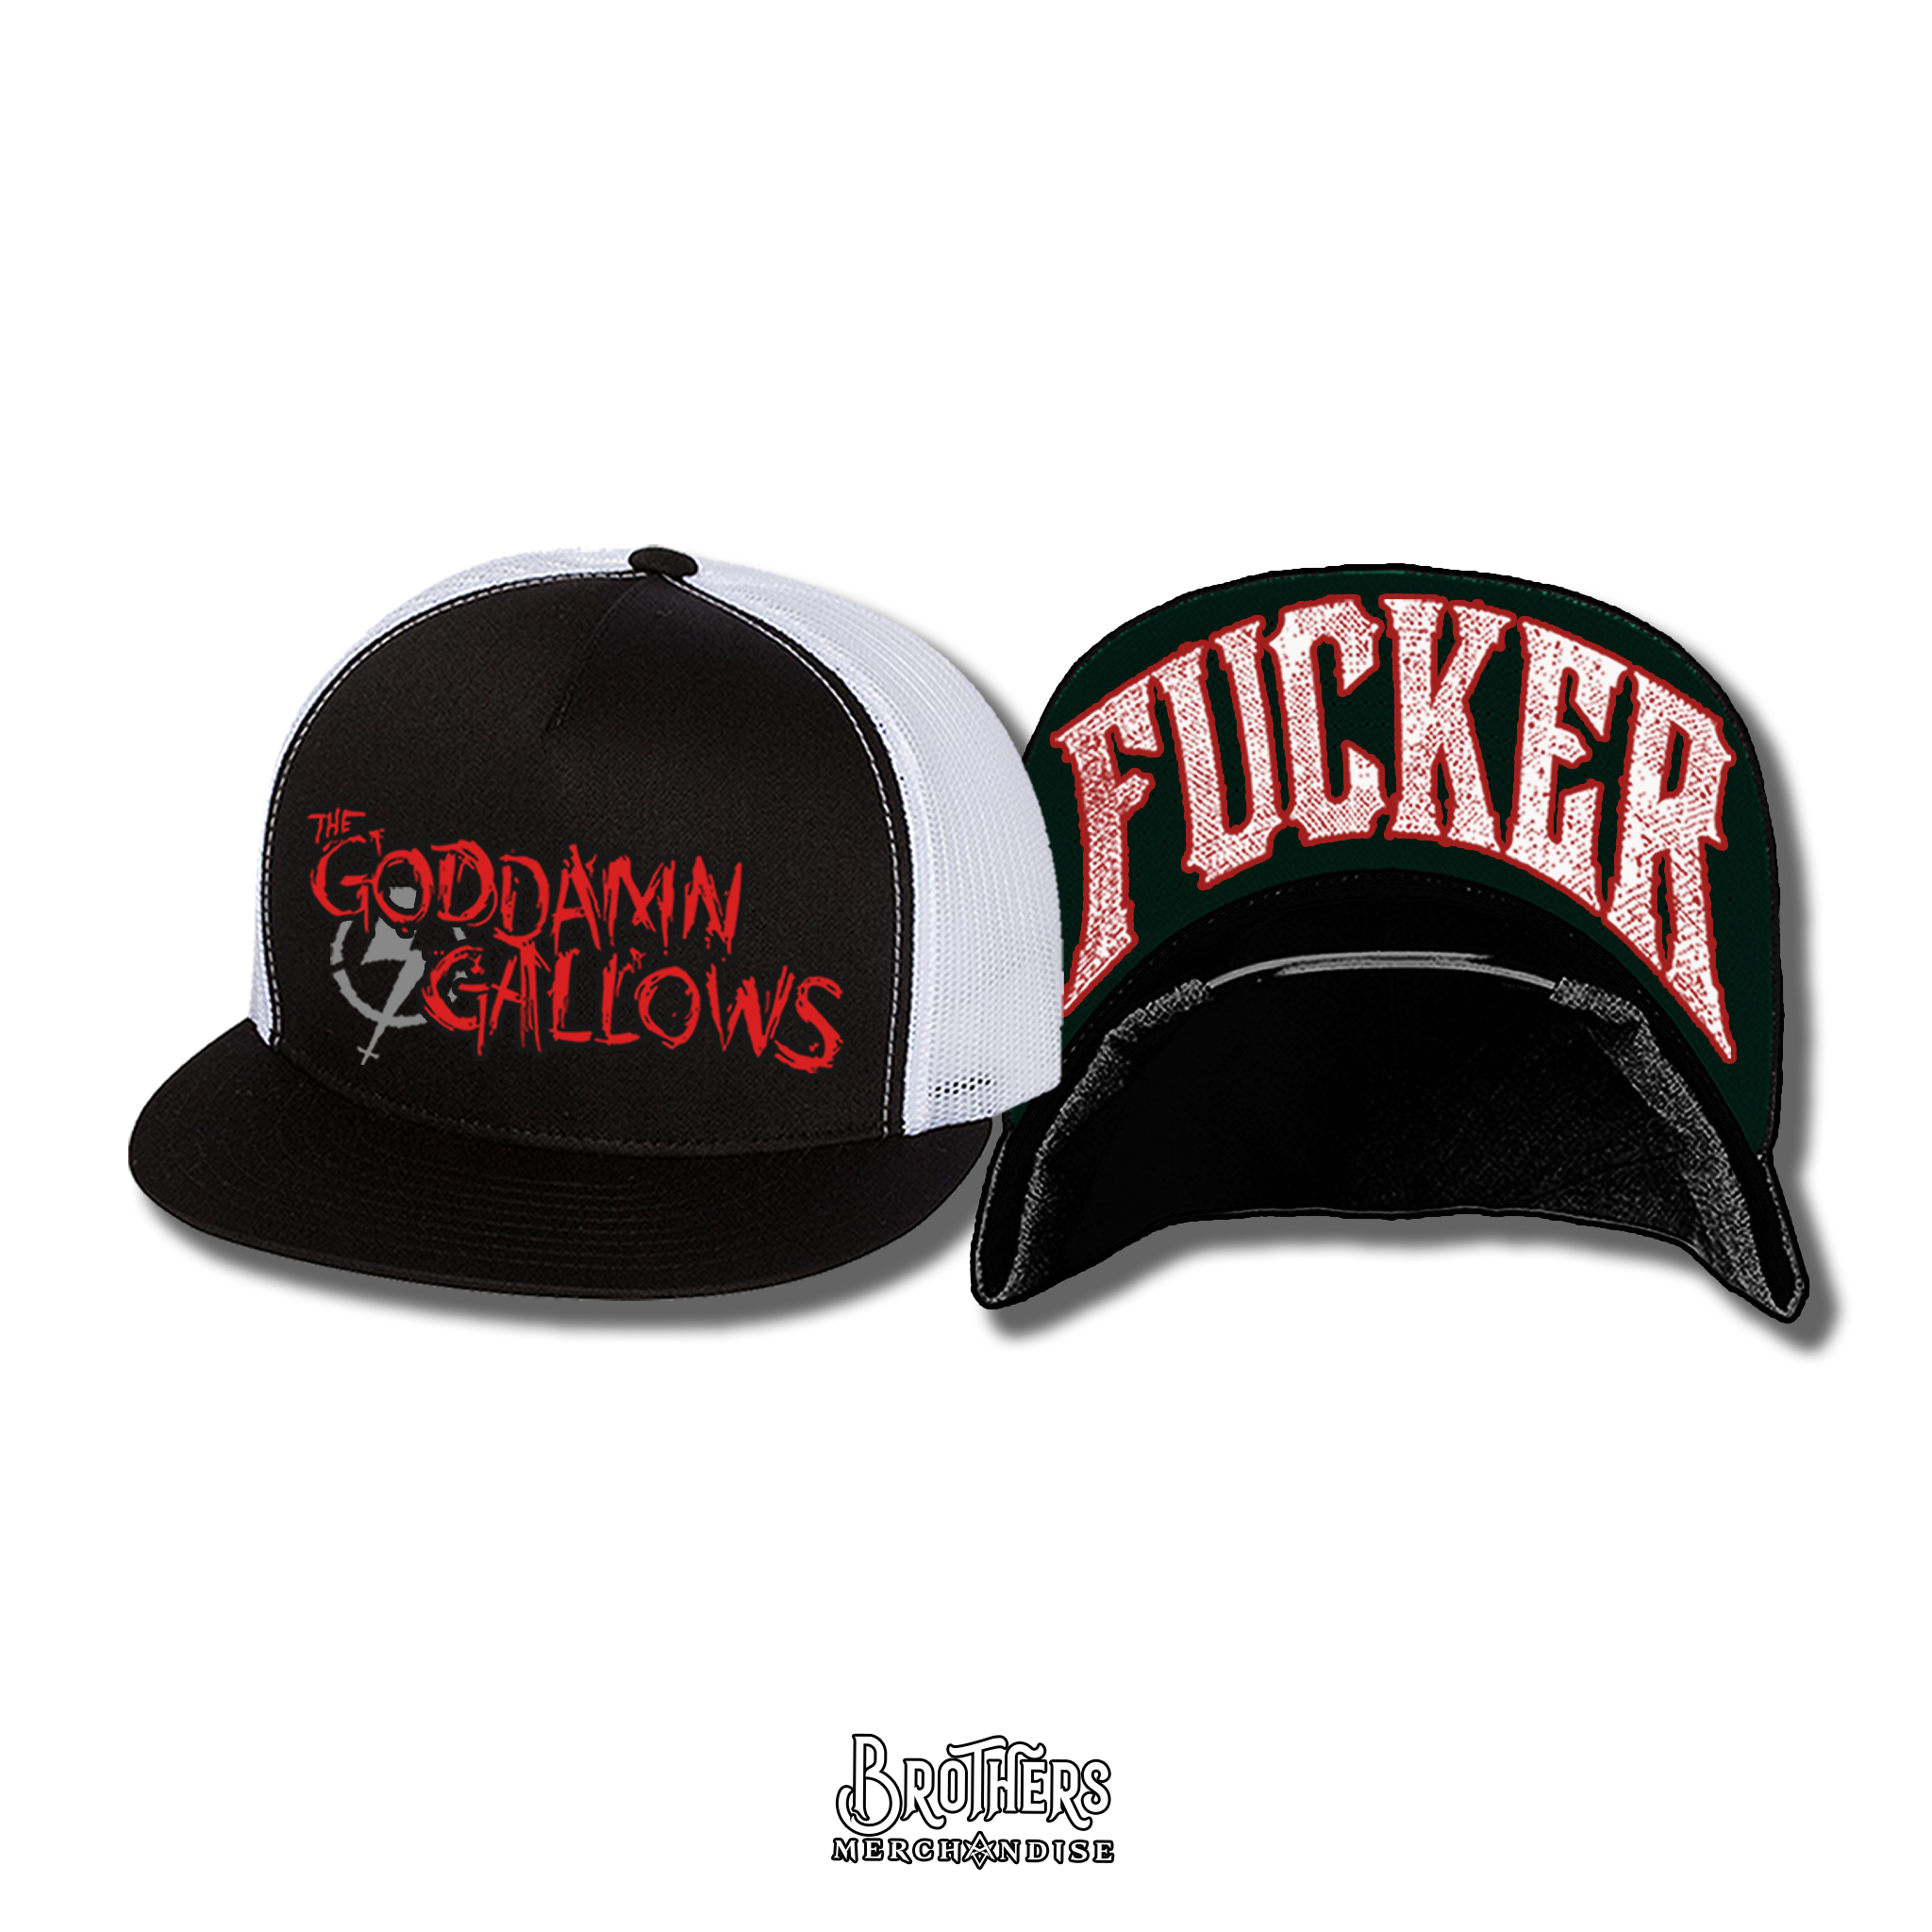 Goddamn Gallows "Fucker" Trucker Hat